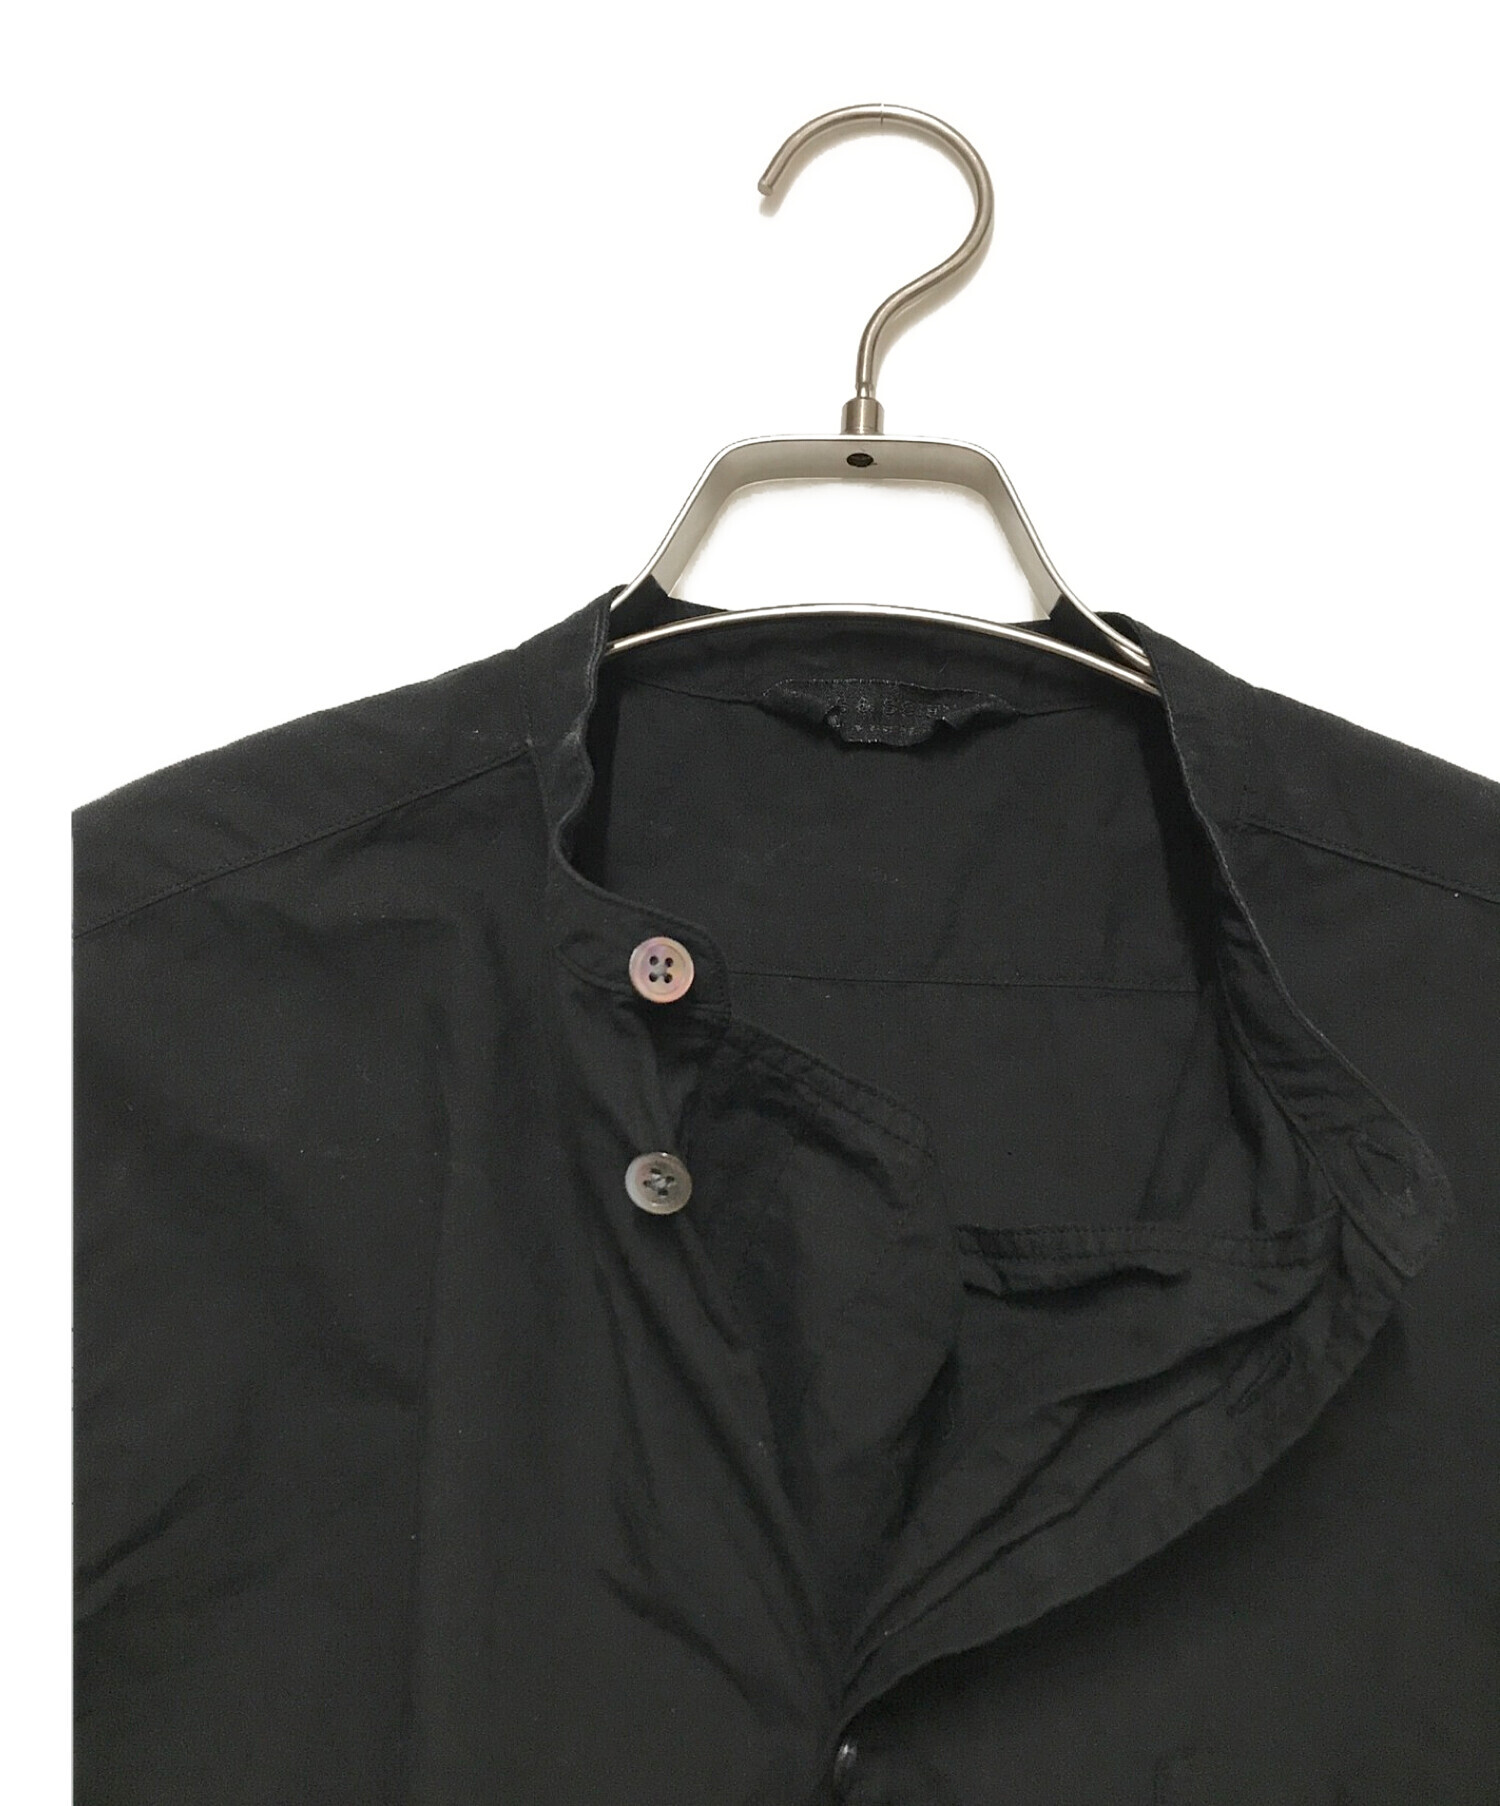 ARTS&SCIENCE (アーツアンドサイエンス) No collar fake shirt ブラック サイズ:1